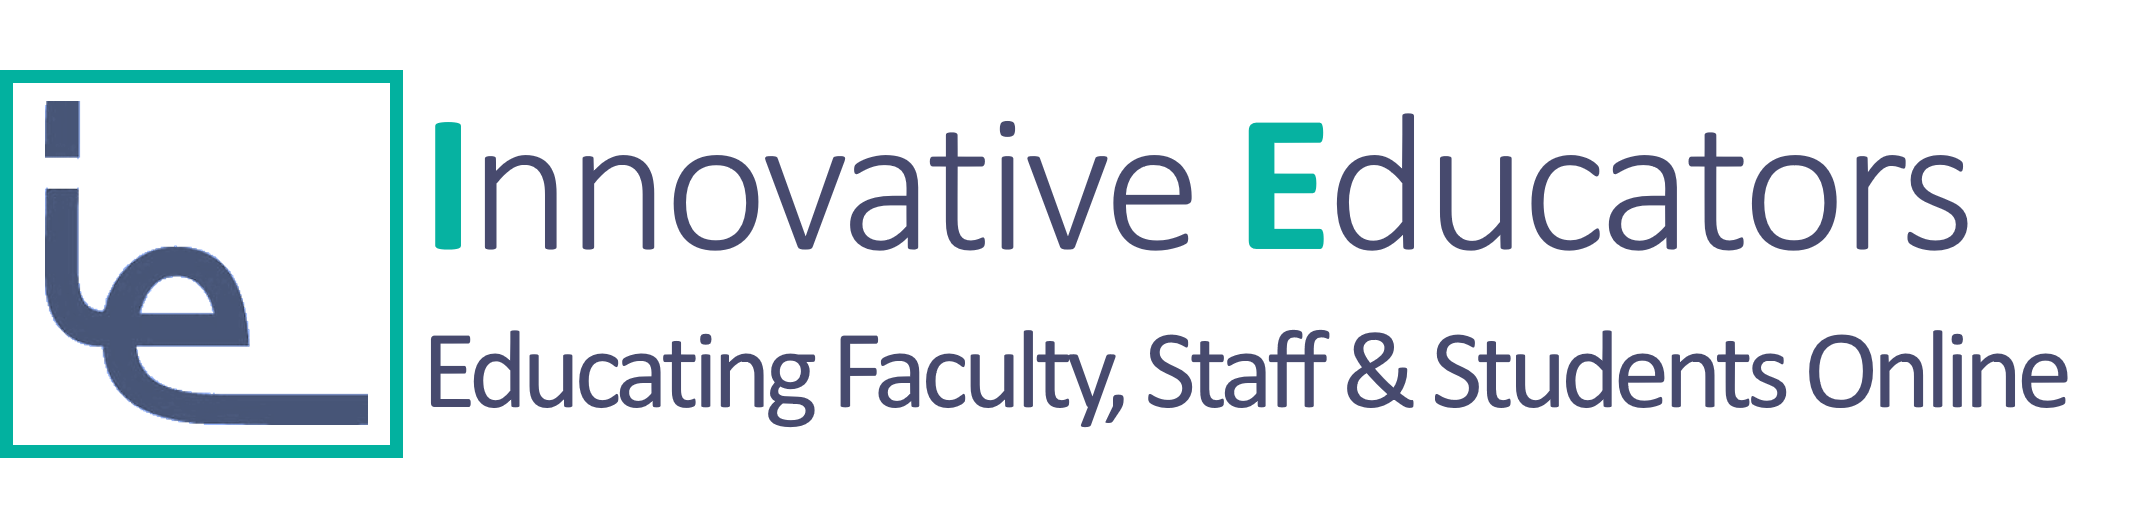 Innovative Educators_Logo